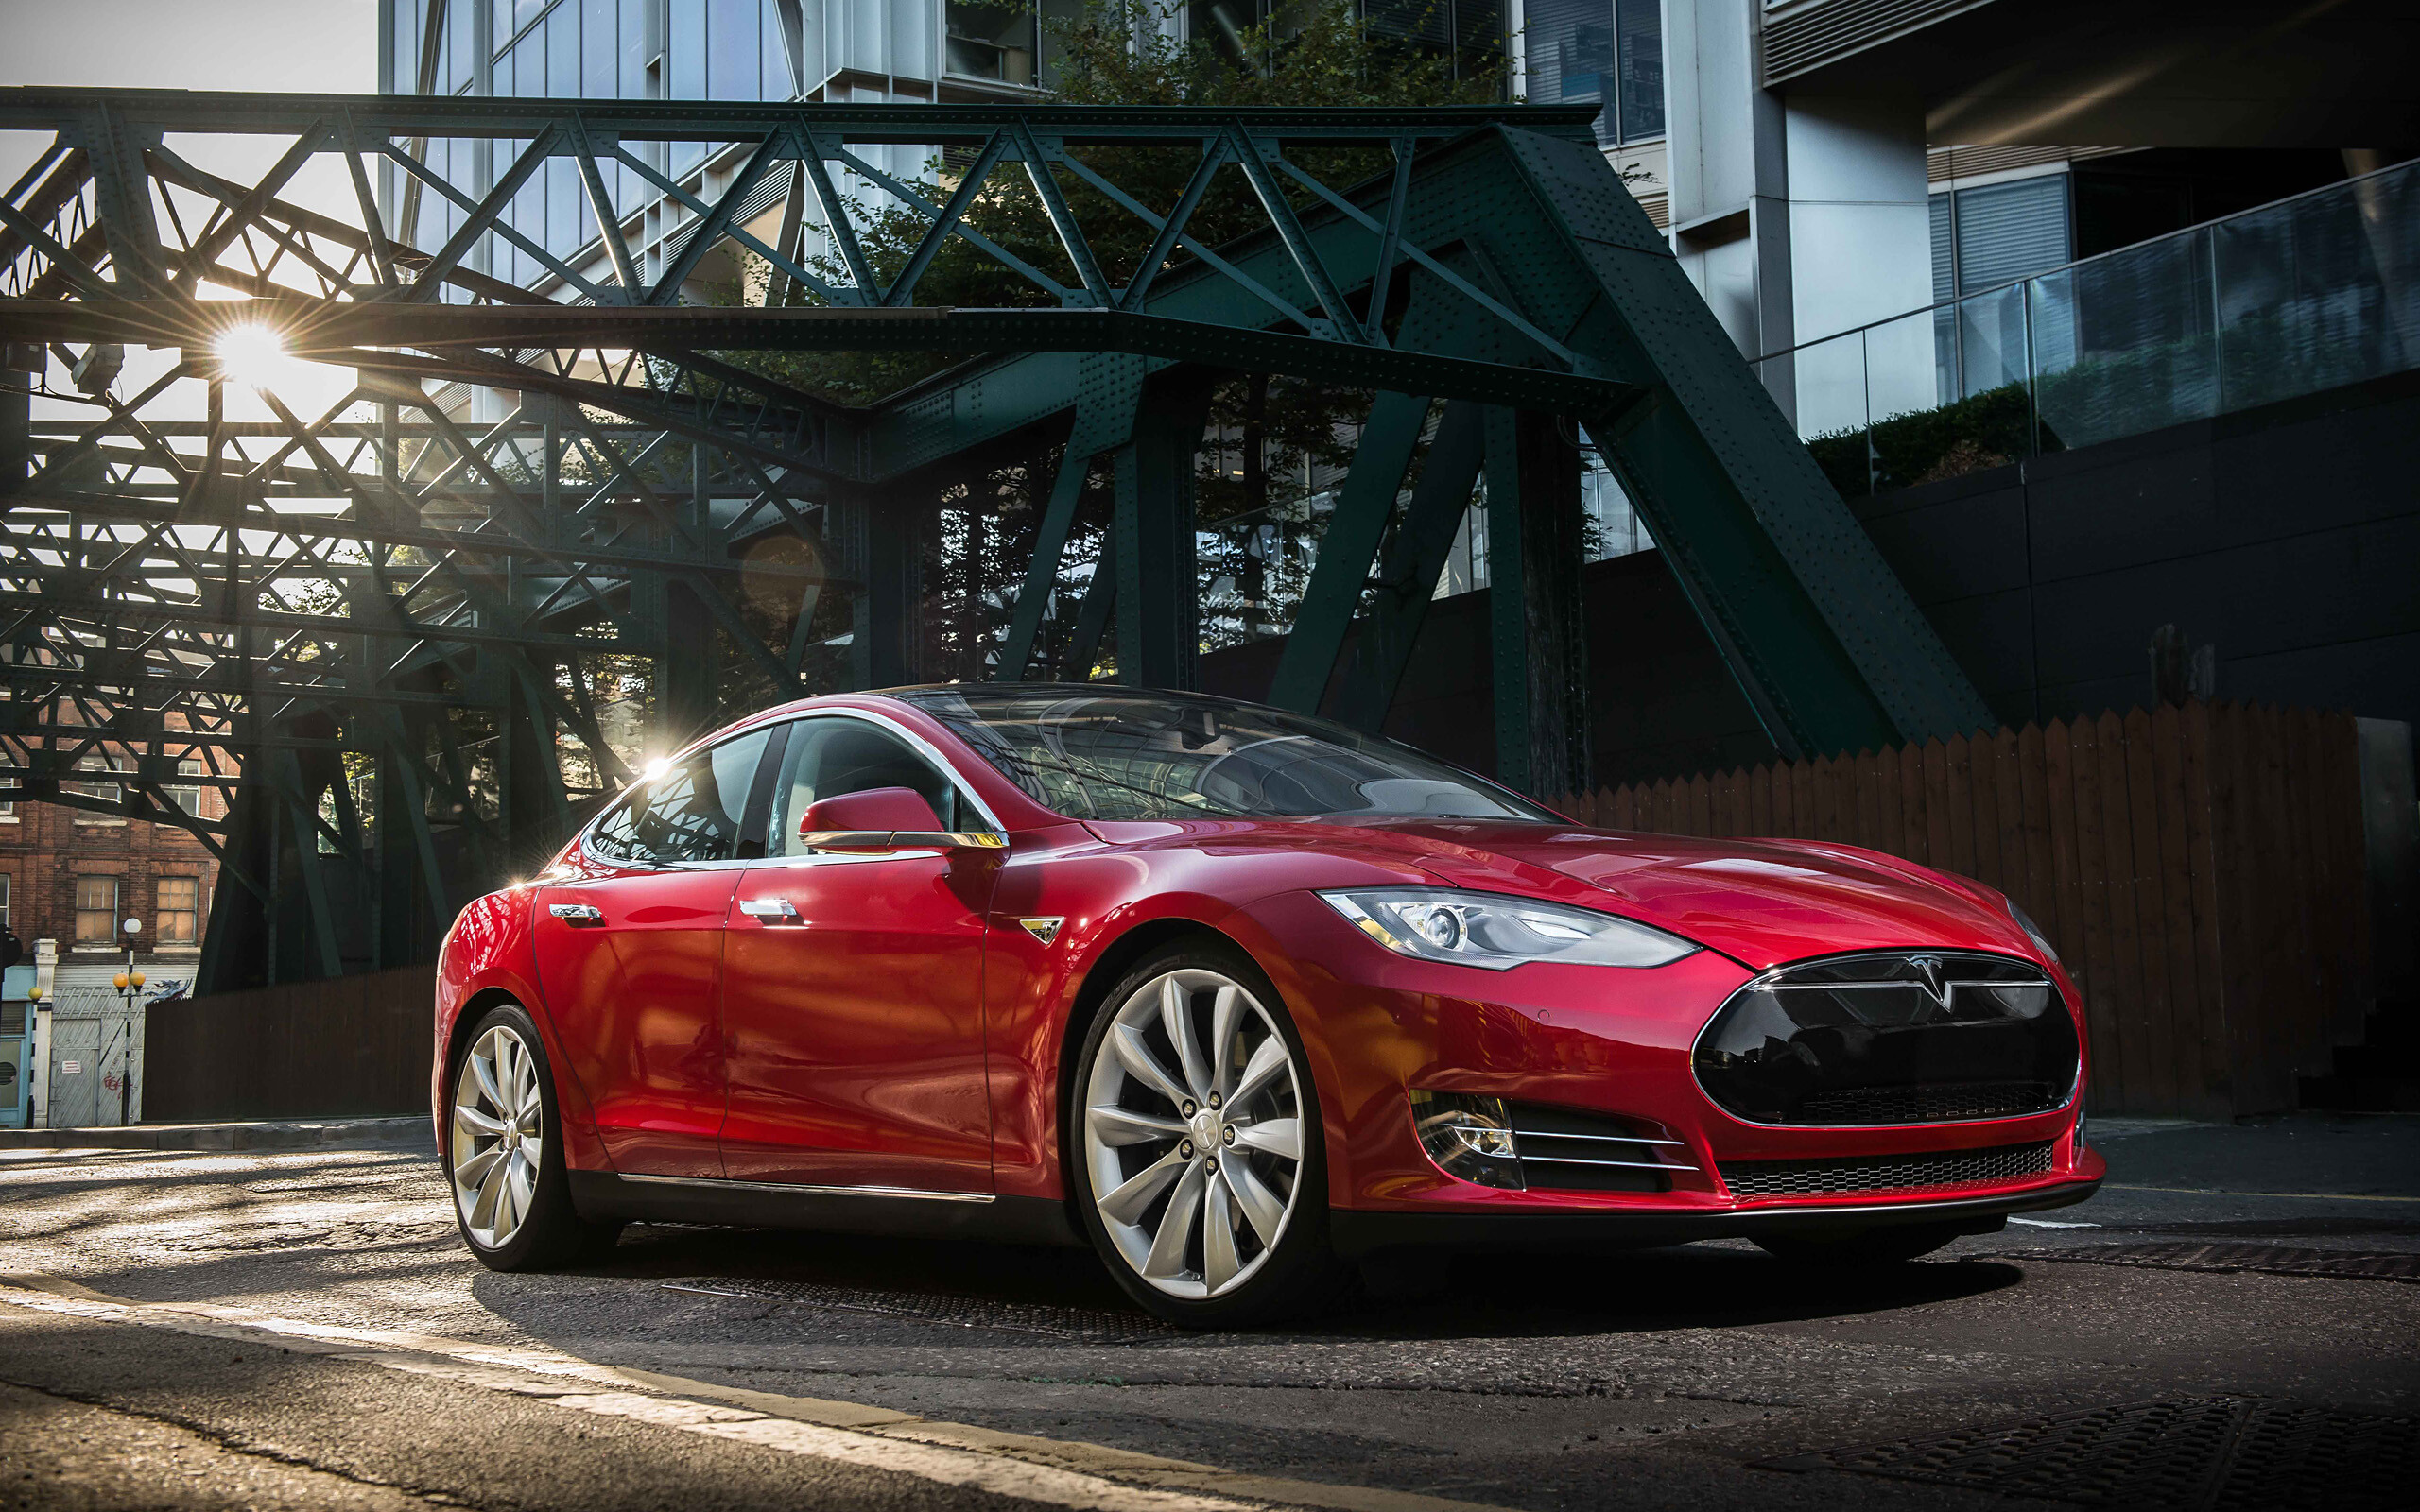 Tesla Model S: Tesla's largest and most powerful sedan, Deliveries began on June 22, 2012. 2560x1600 HD Wallpaper.